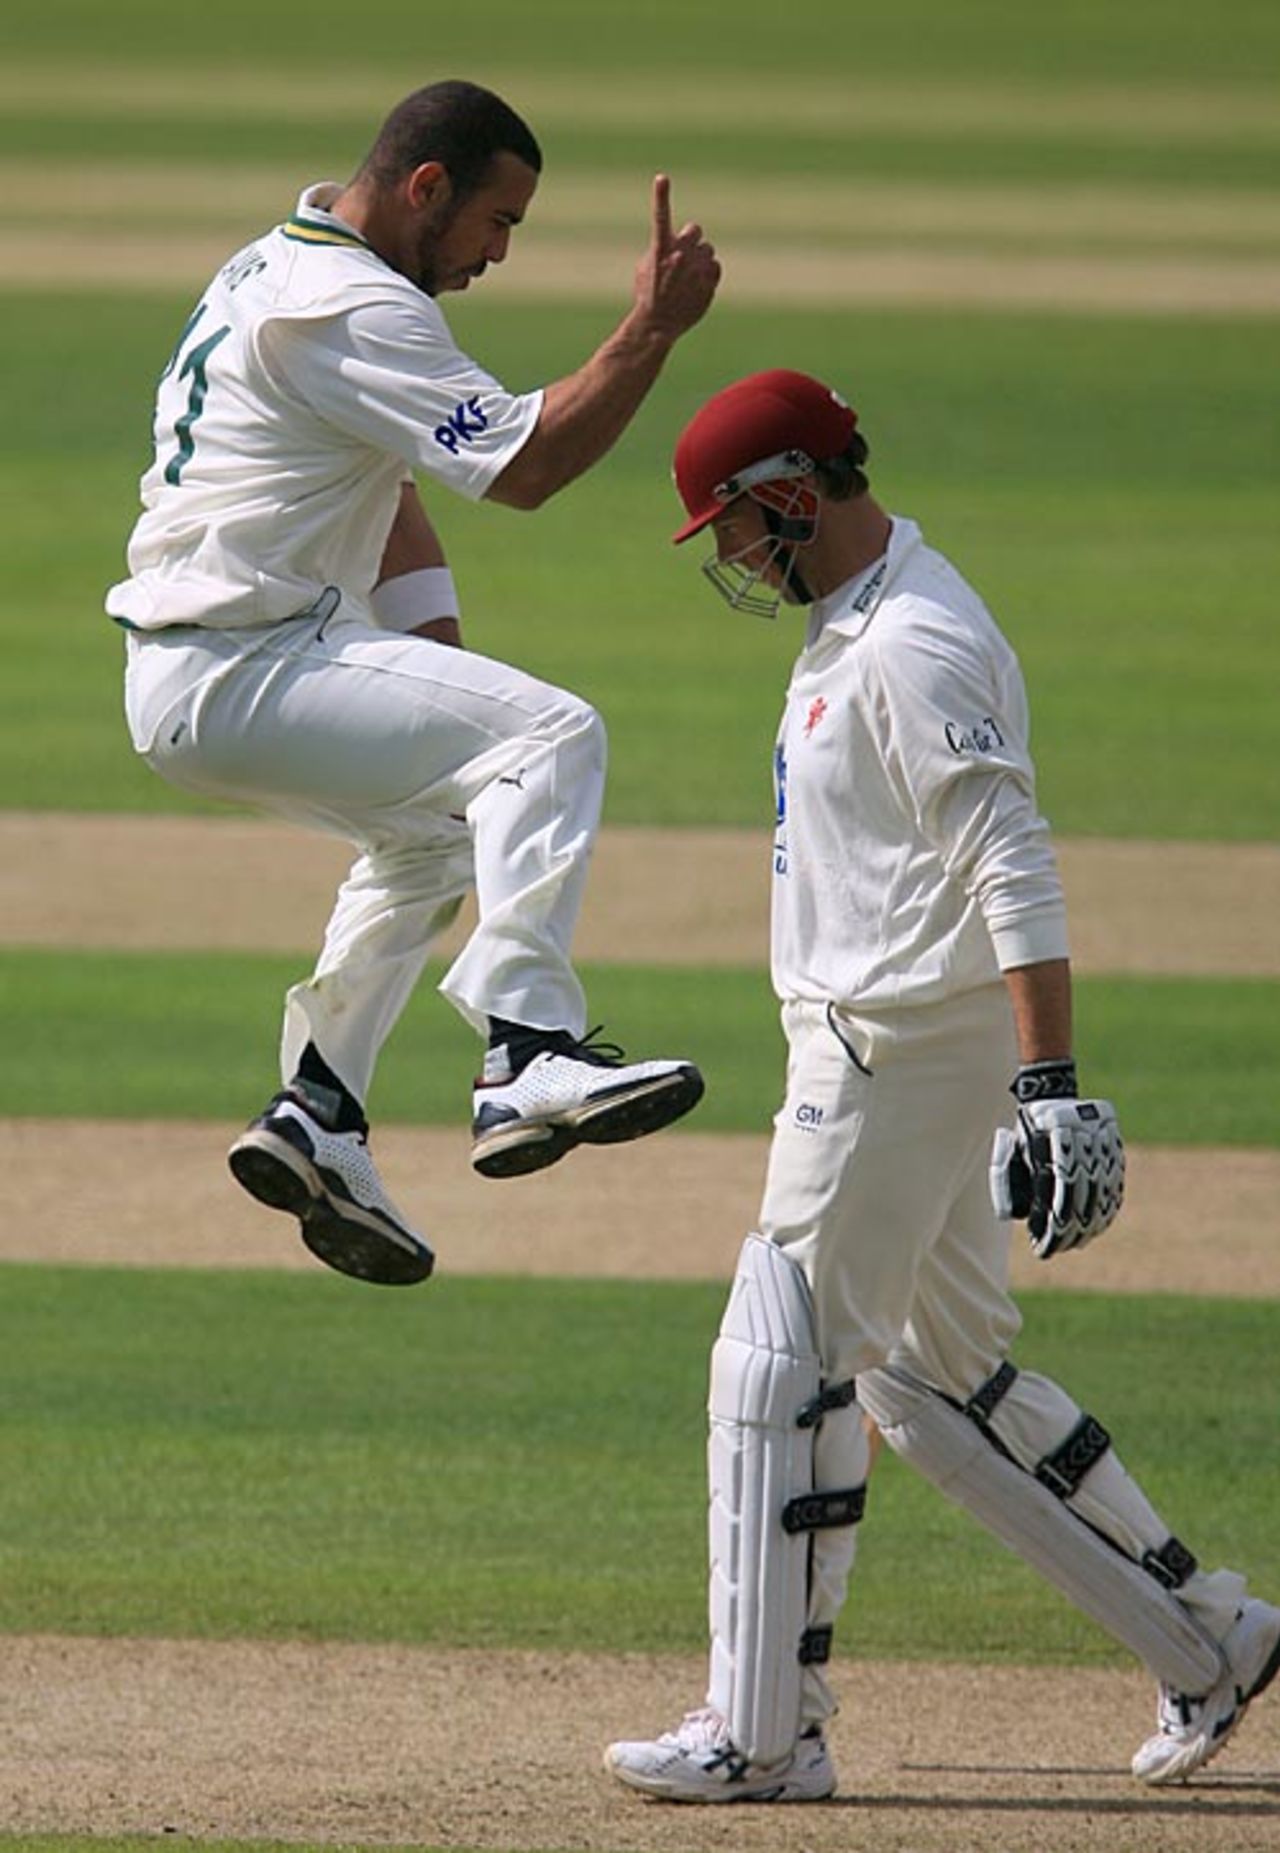 Andre Adams celebrates taking the wicket of Marcus Trescothick, Nottinghamshire v Somerset, Nottingham, September 3, 2008